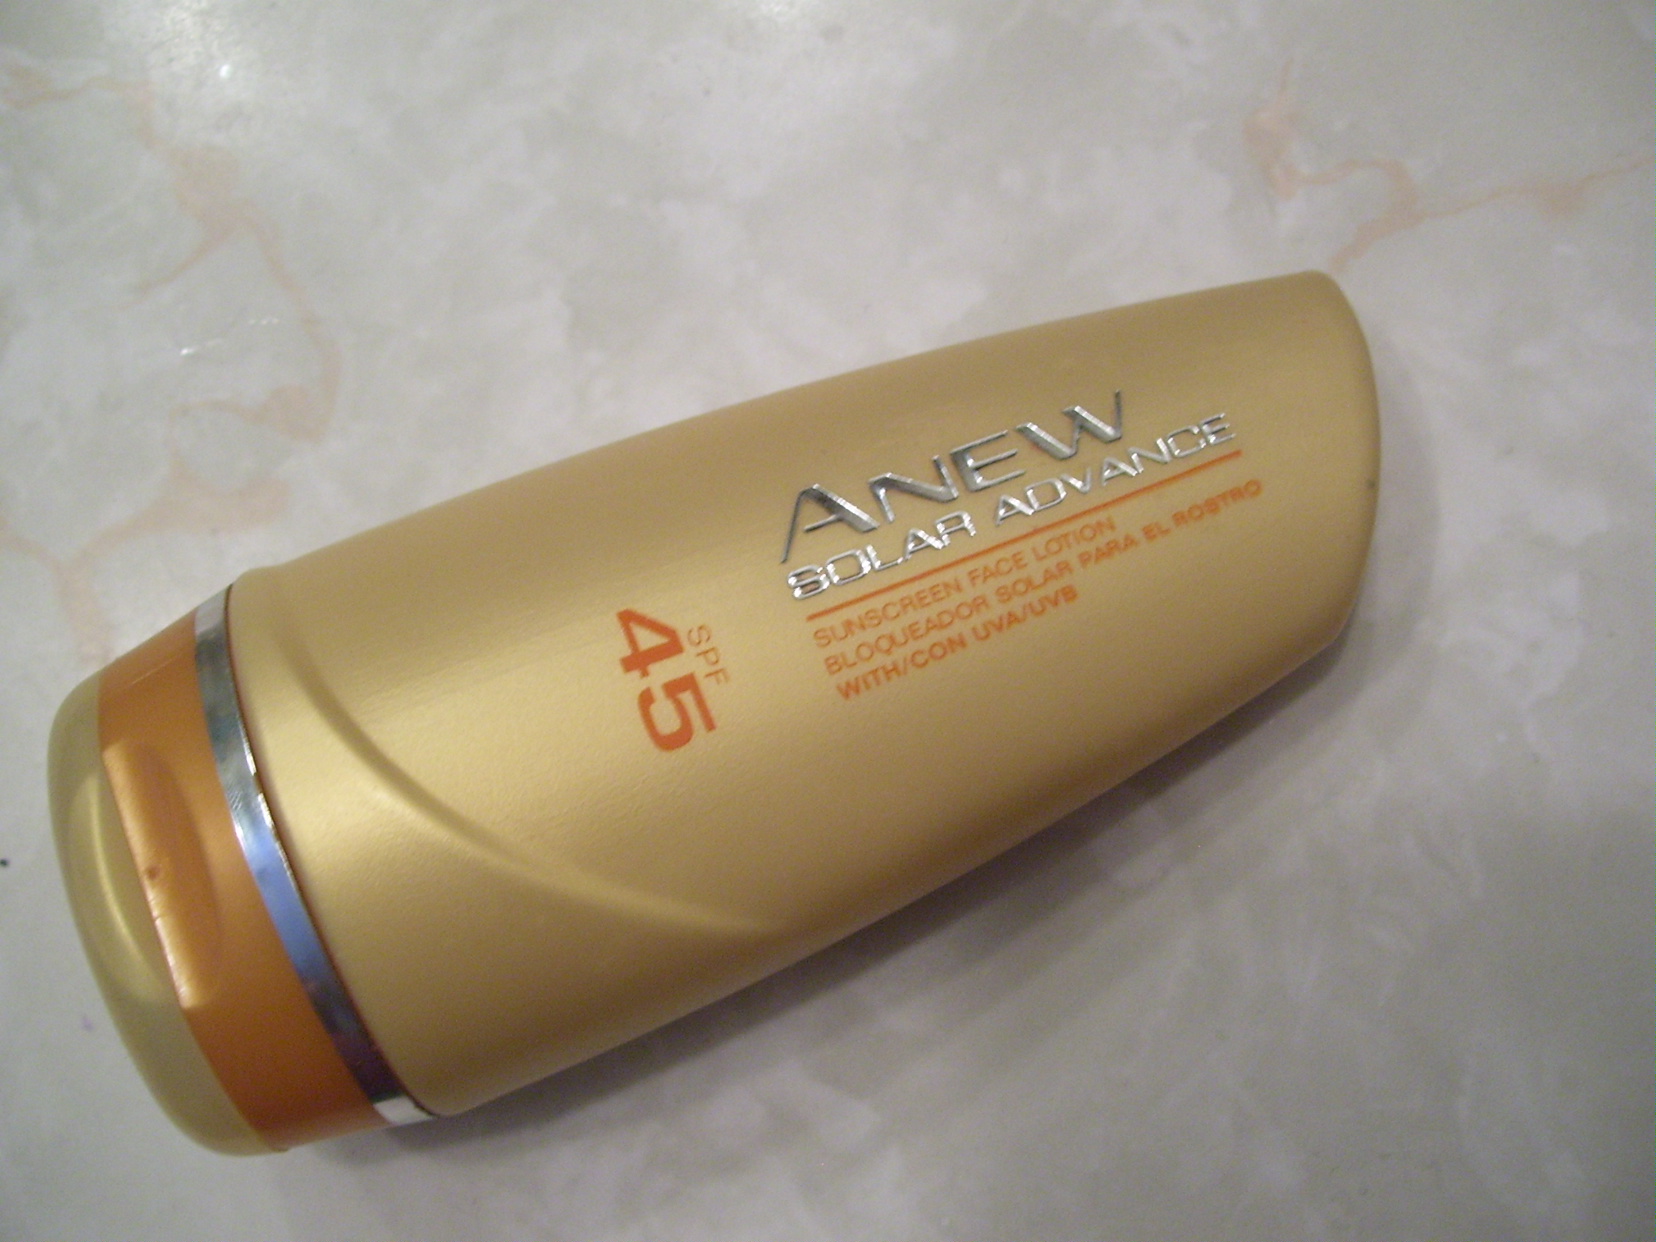 Avon Anew Solar Advance Sunscreen Face Lotion